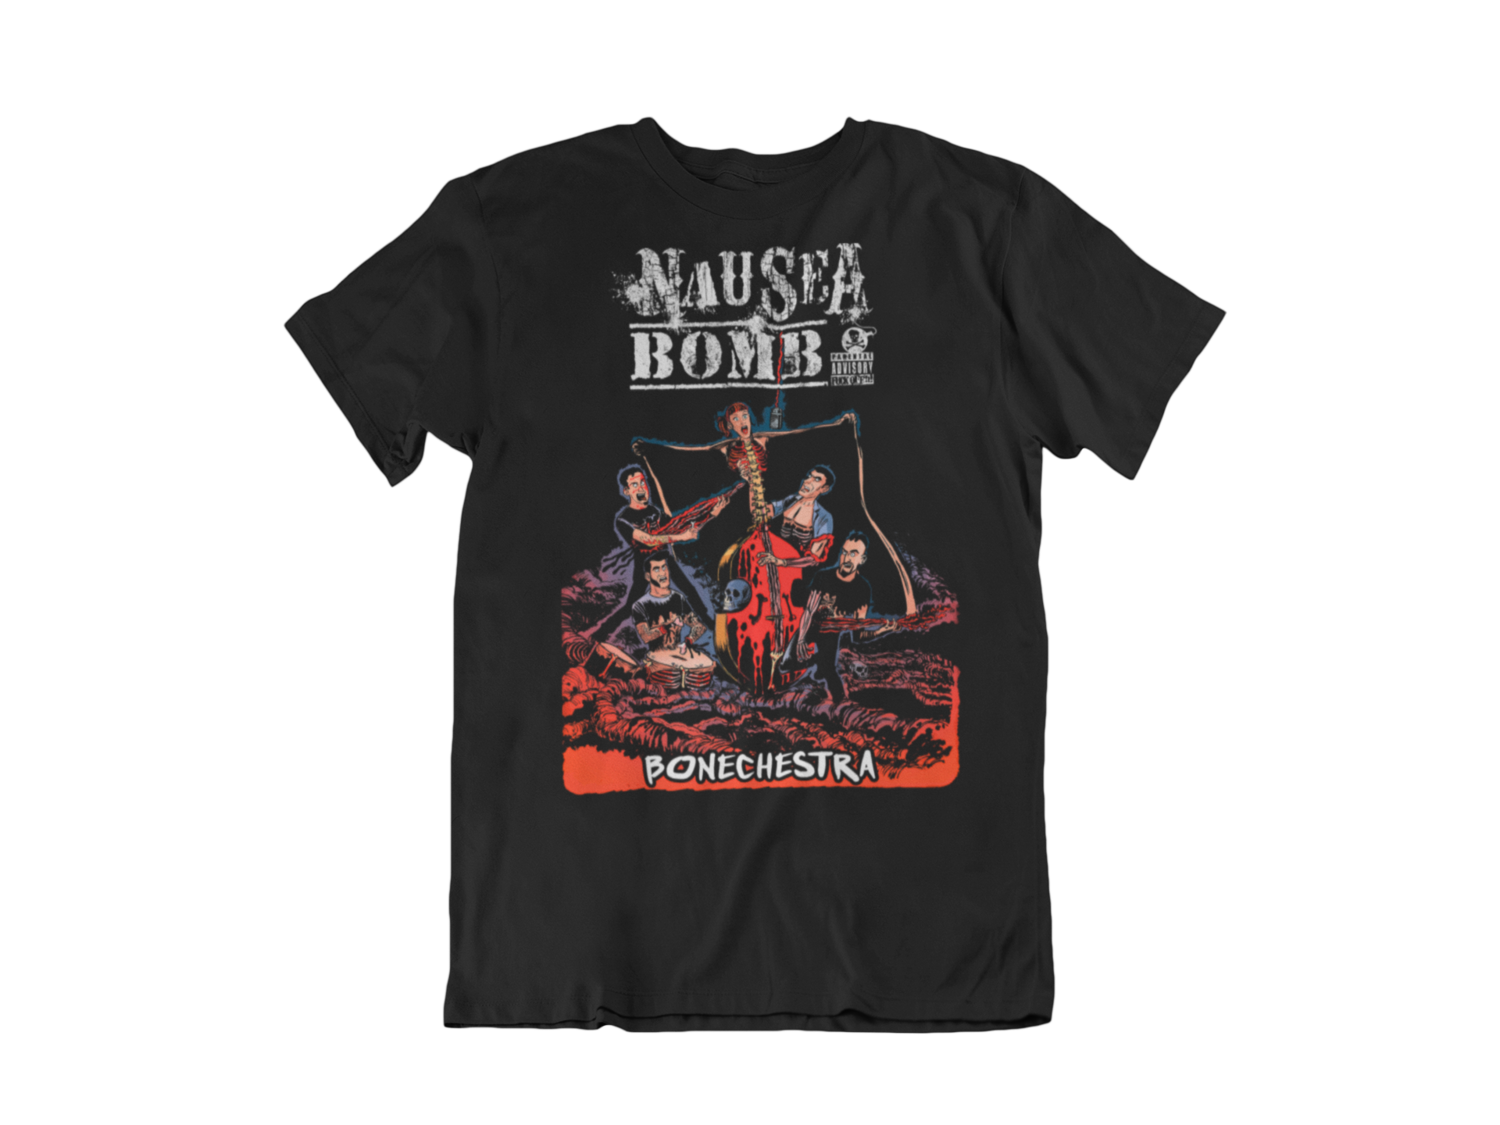 NAUSEA BOMB "Bonechestra" tshirt for MEN